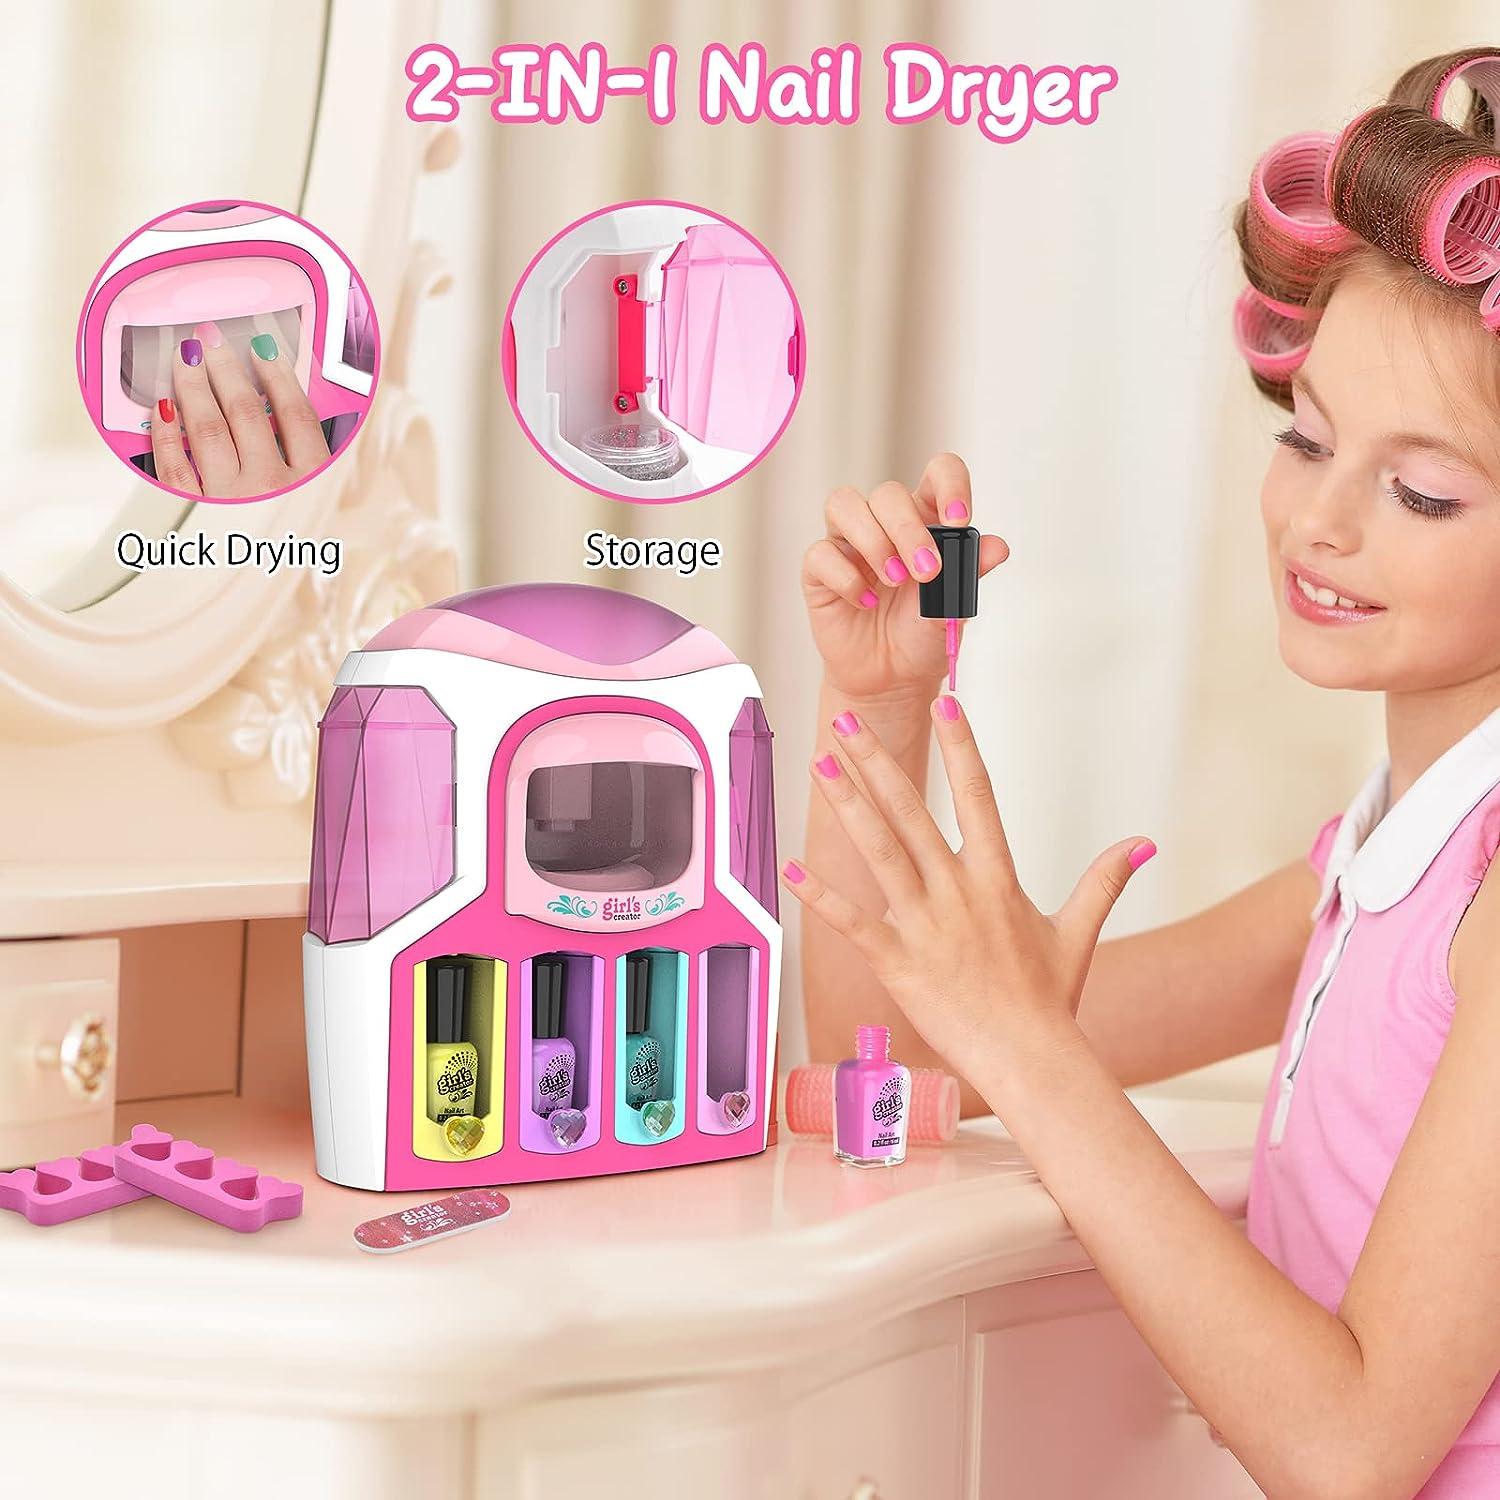 Nail Art Studio for Girls - Nail Polish Kit for Kids Ages 7-12